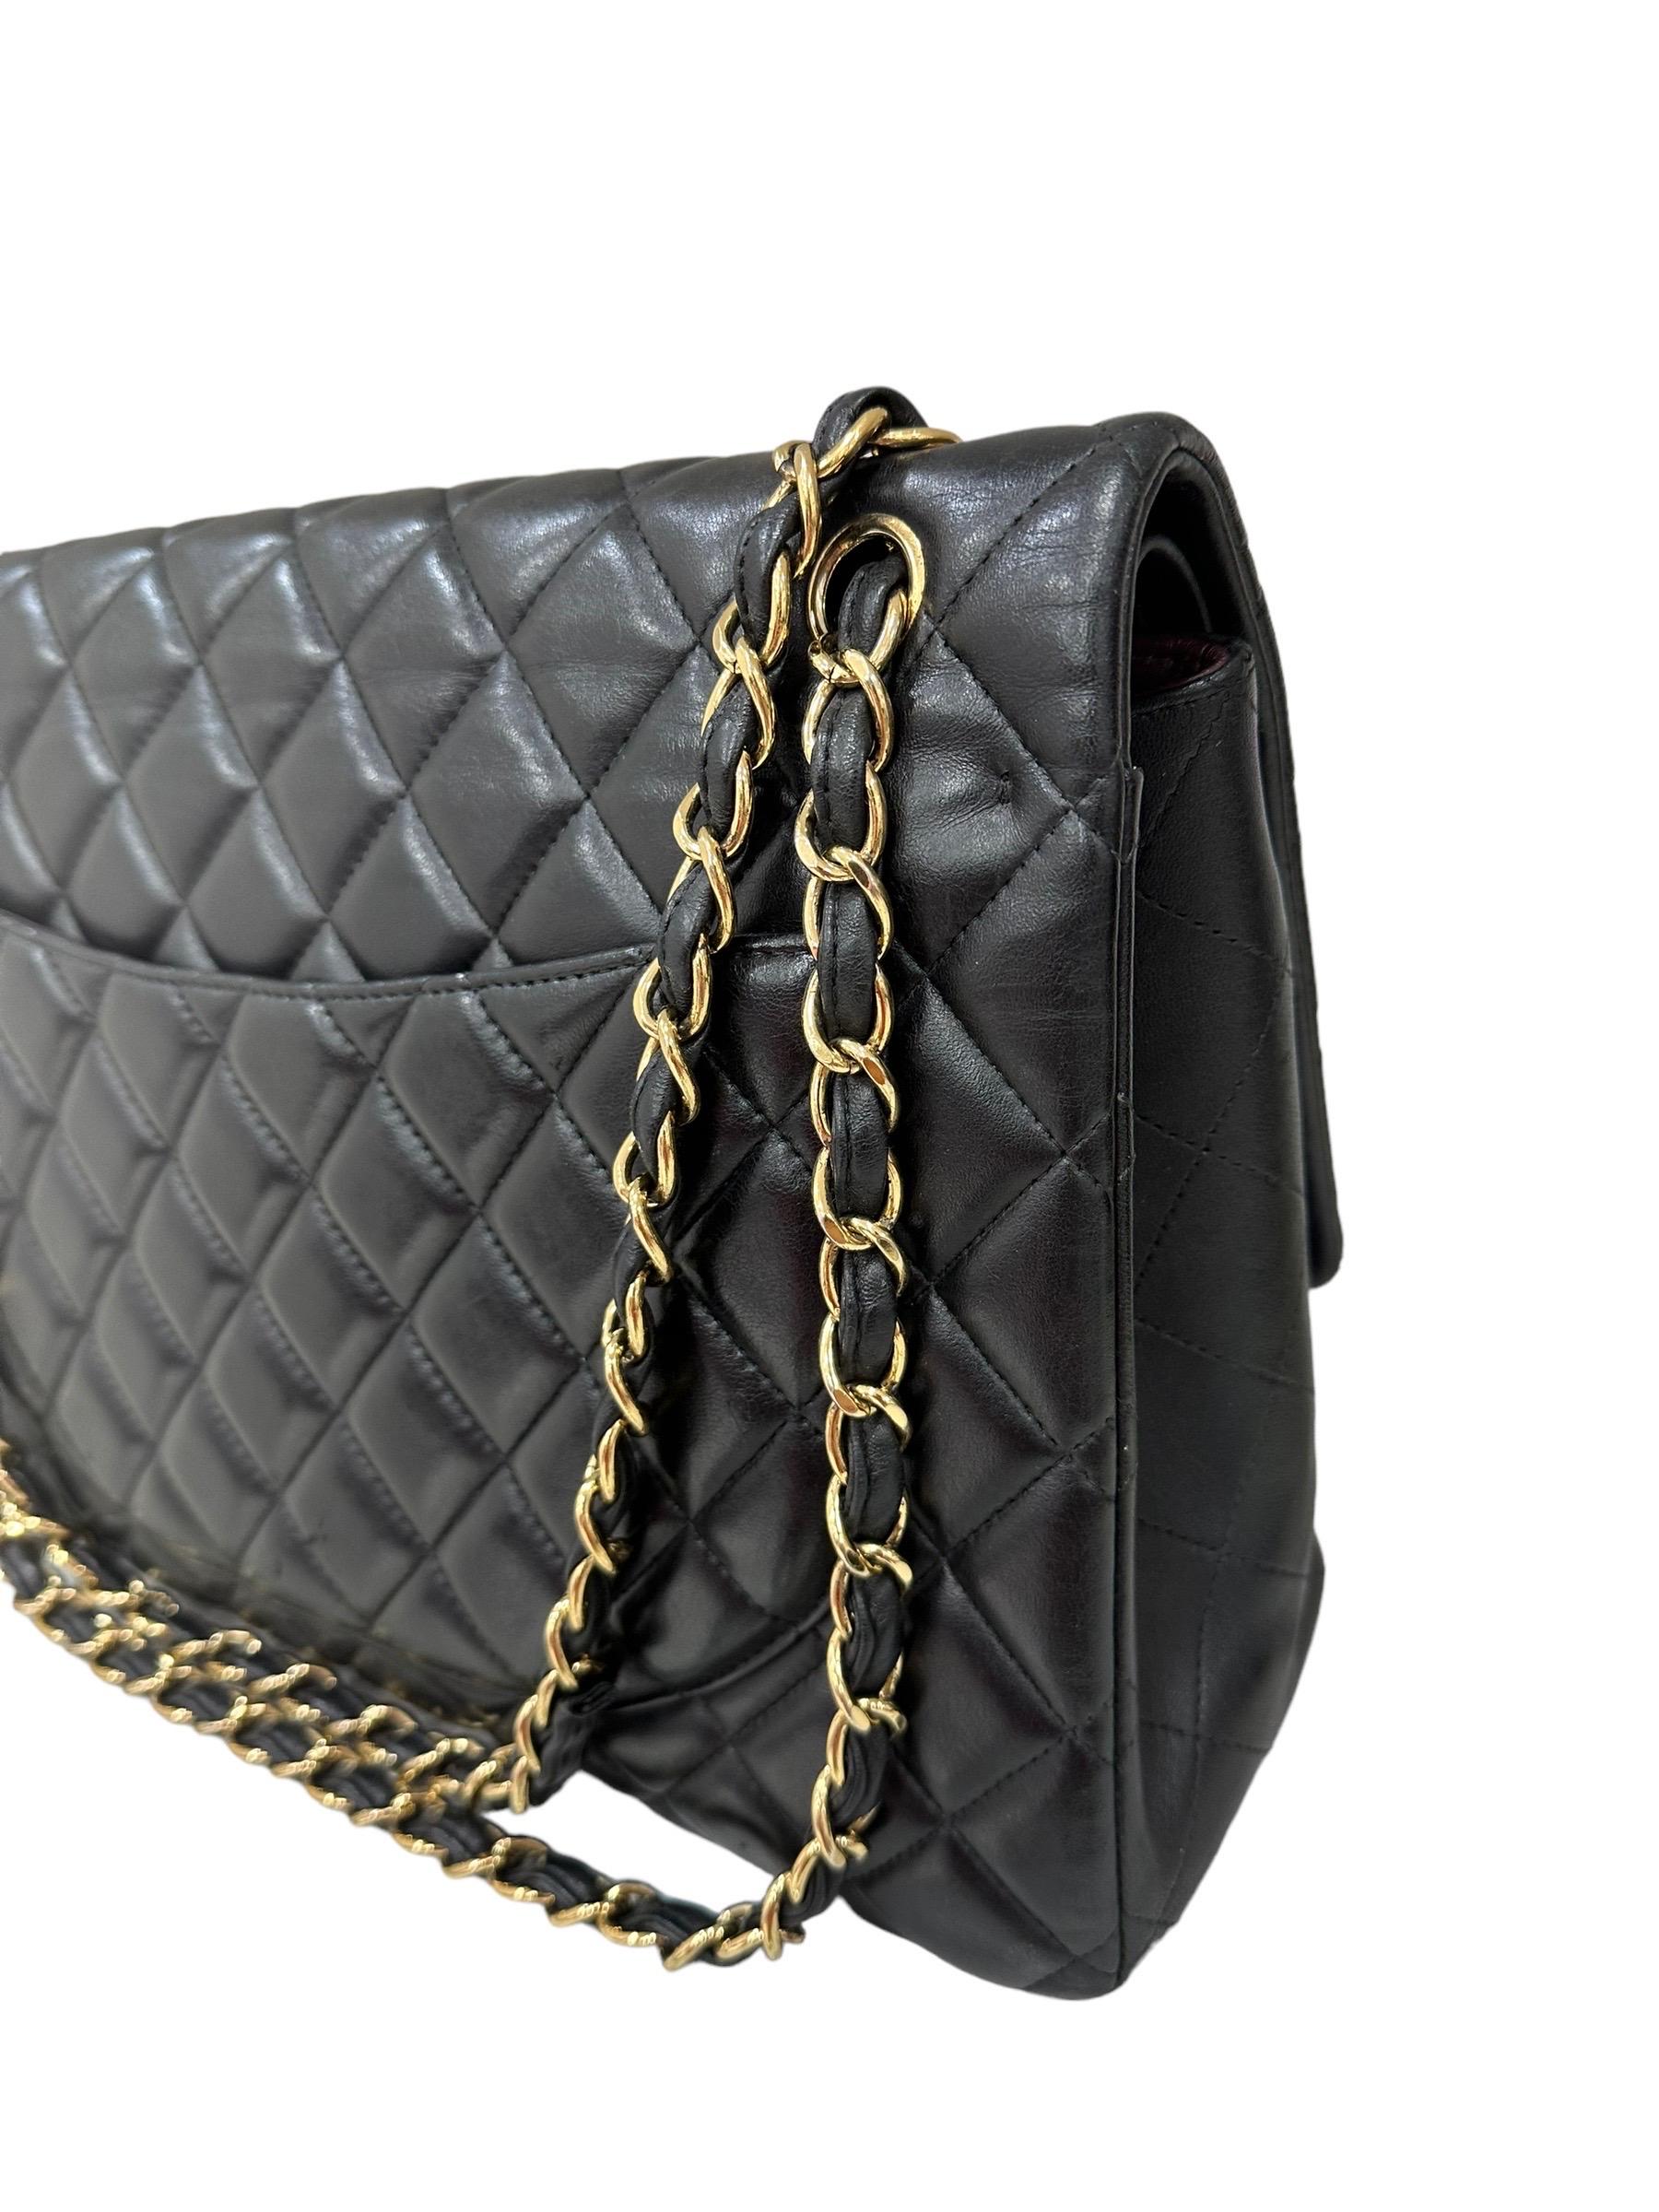 2011 Chanel Timeless Maxi Jumbo Black Leather Top Shoulder Bag For Sale 2